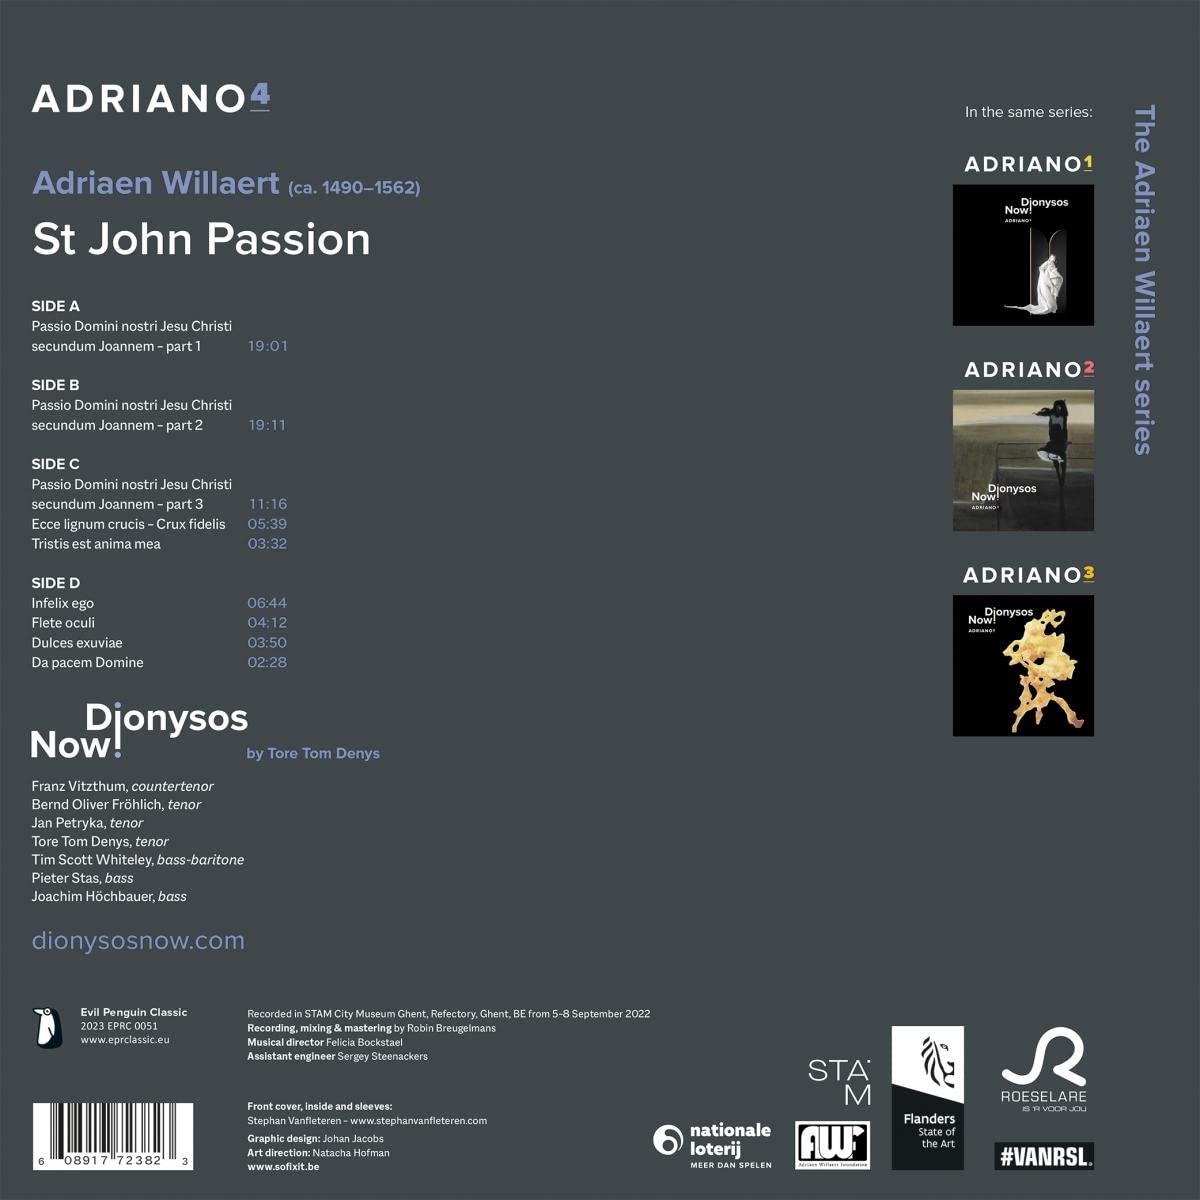 Willaert Adriano 4 St John Passion Vinyl Dionysos Now La Boîte à Musique